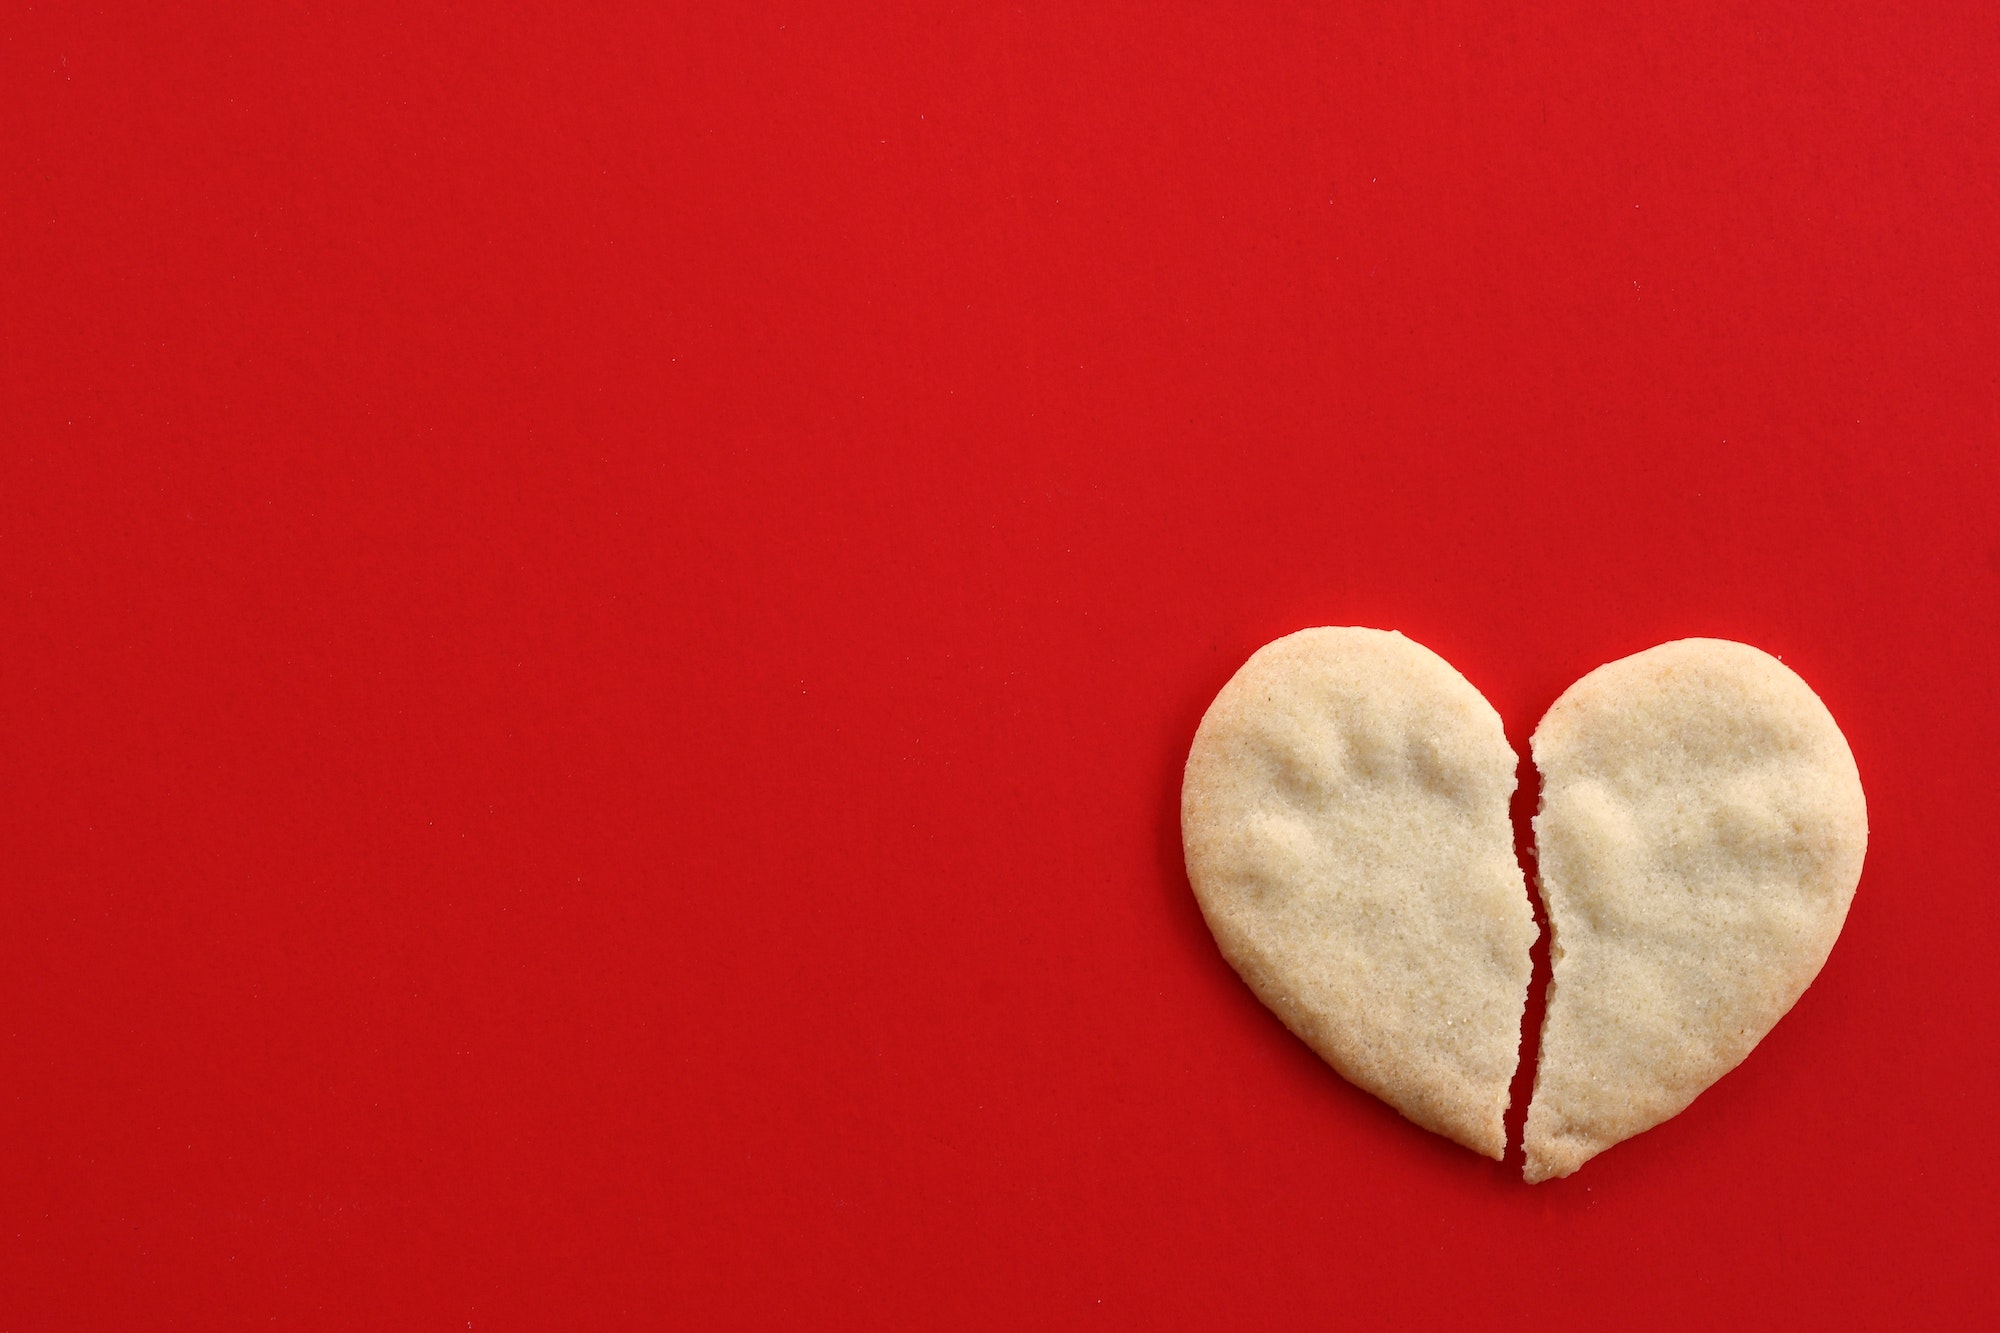 Broken heart cookie on red - concept breaking up, divorce, ending relationship, brokenhearted